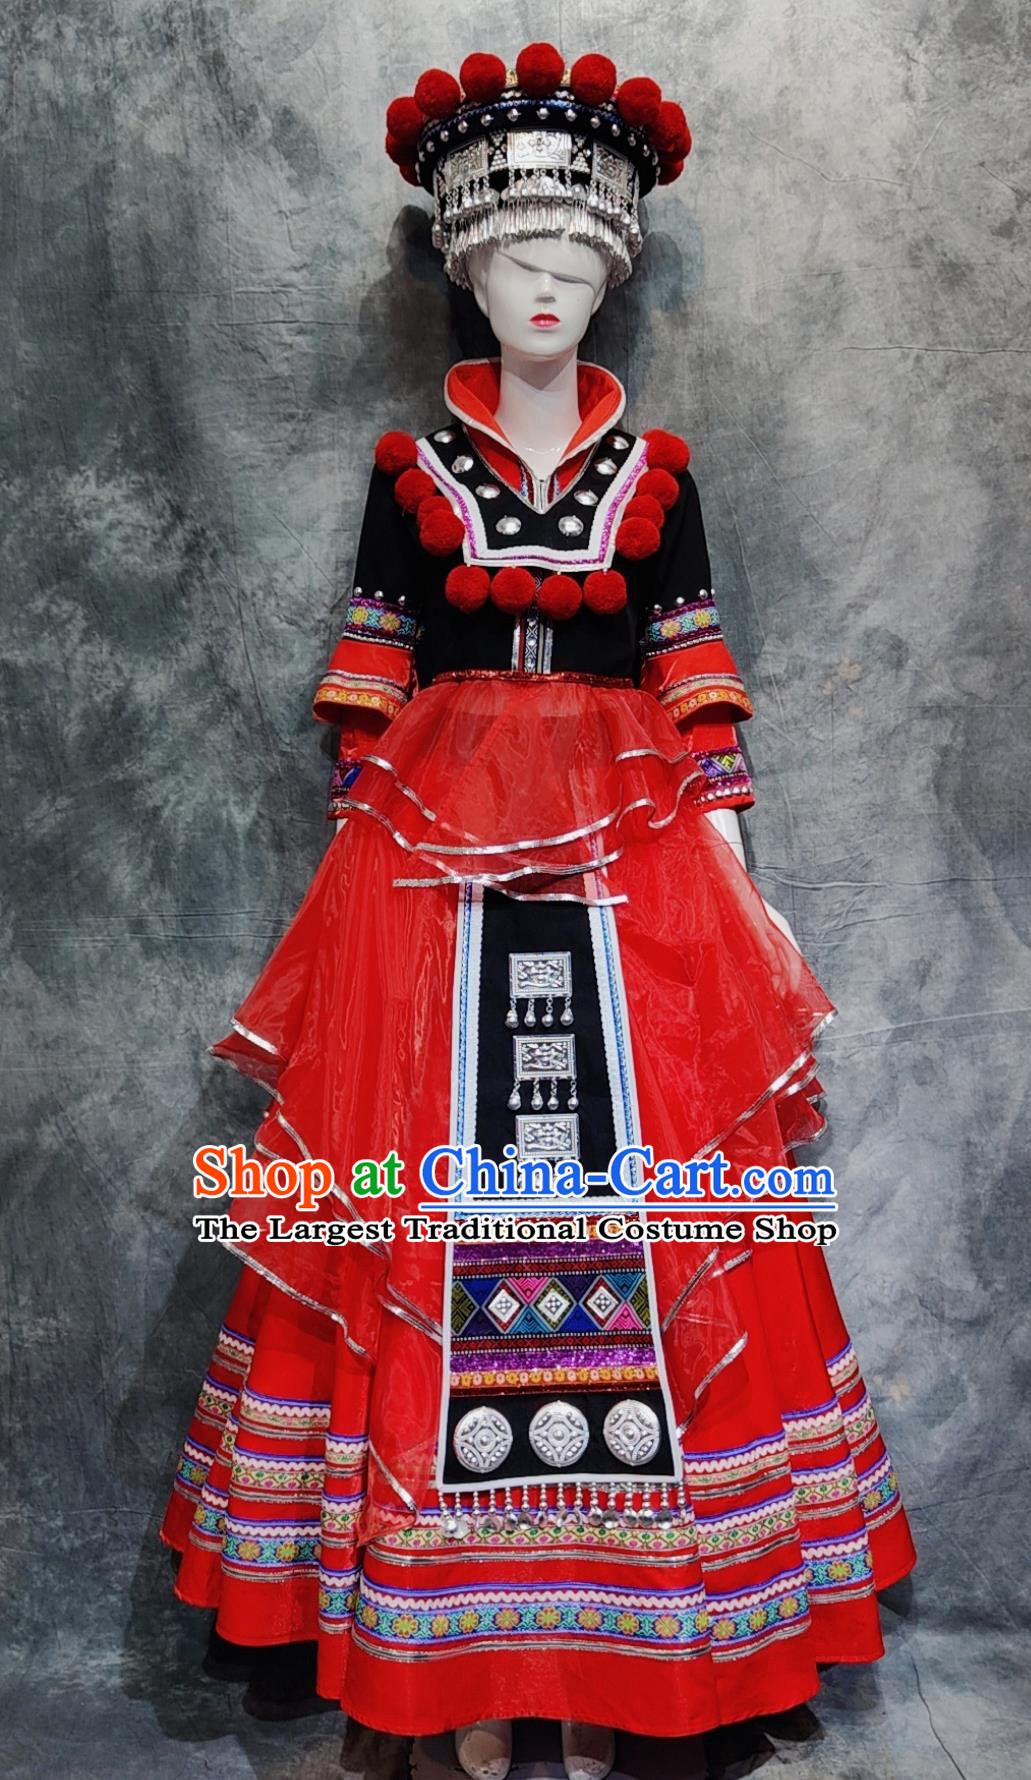 China Guangxi Folk Dance Costume Yao Ethnic Woman Festival Clothing Chinese National Minority Stage Performance Red Dress